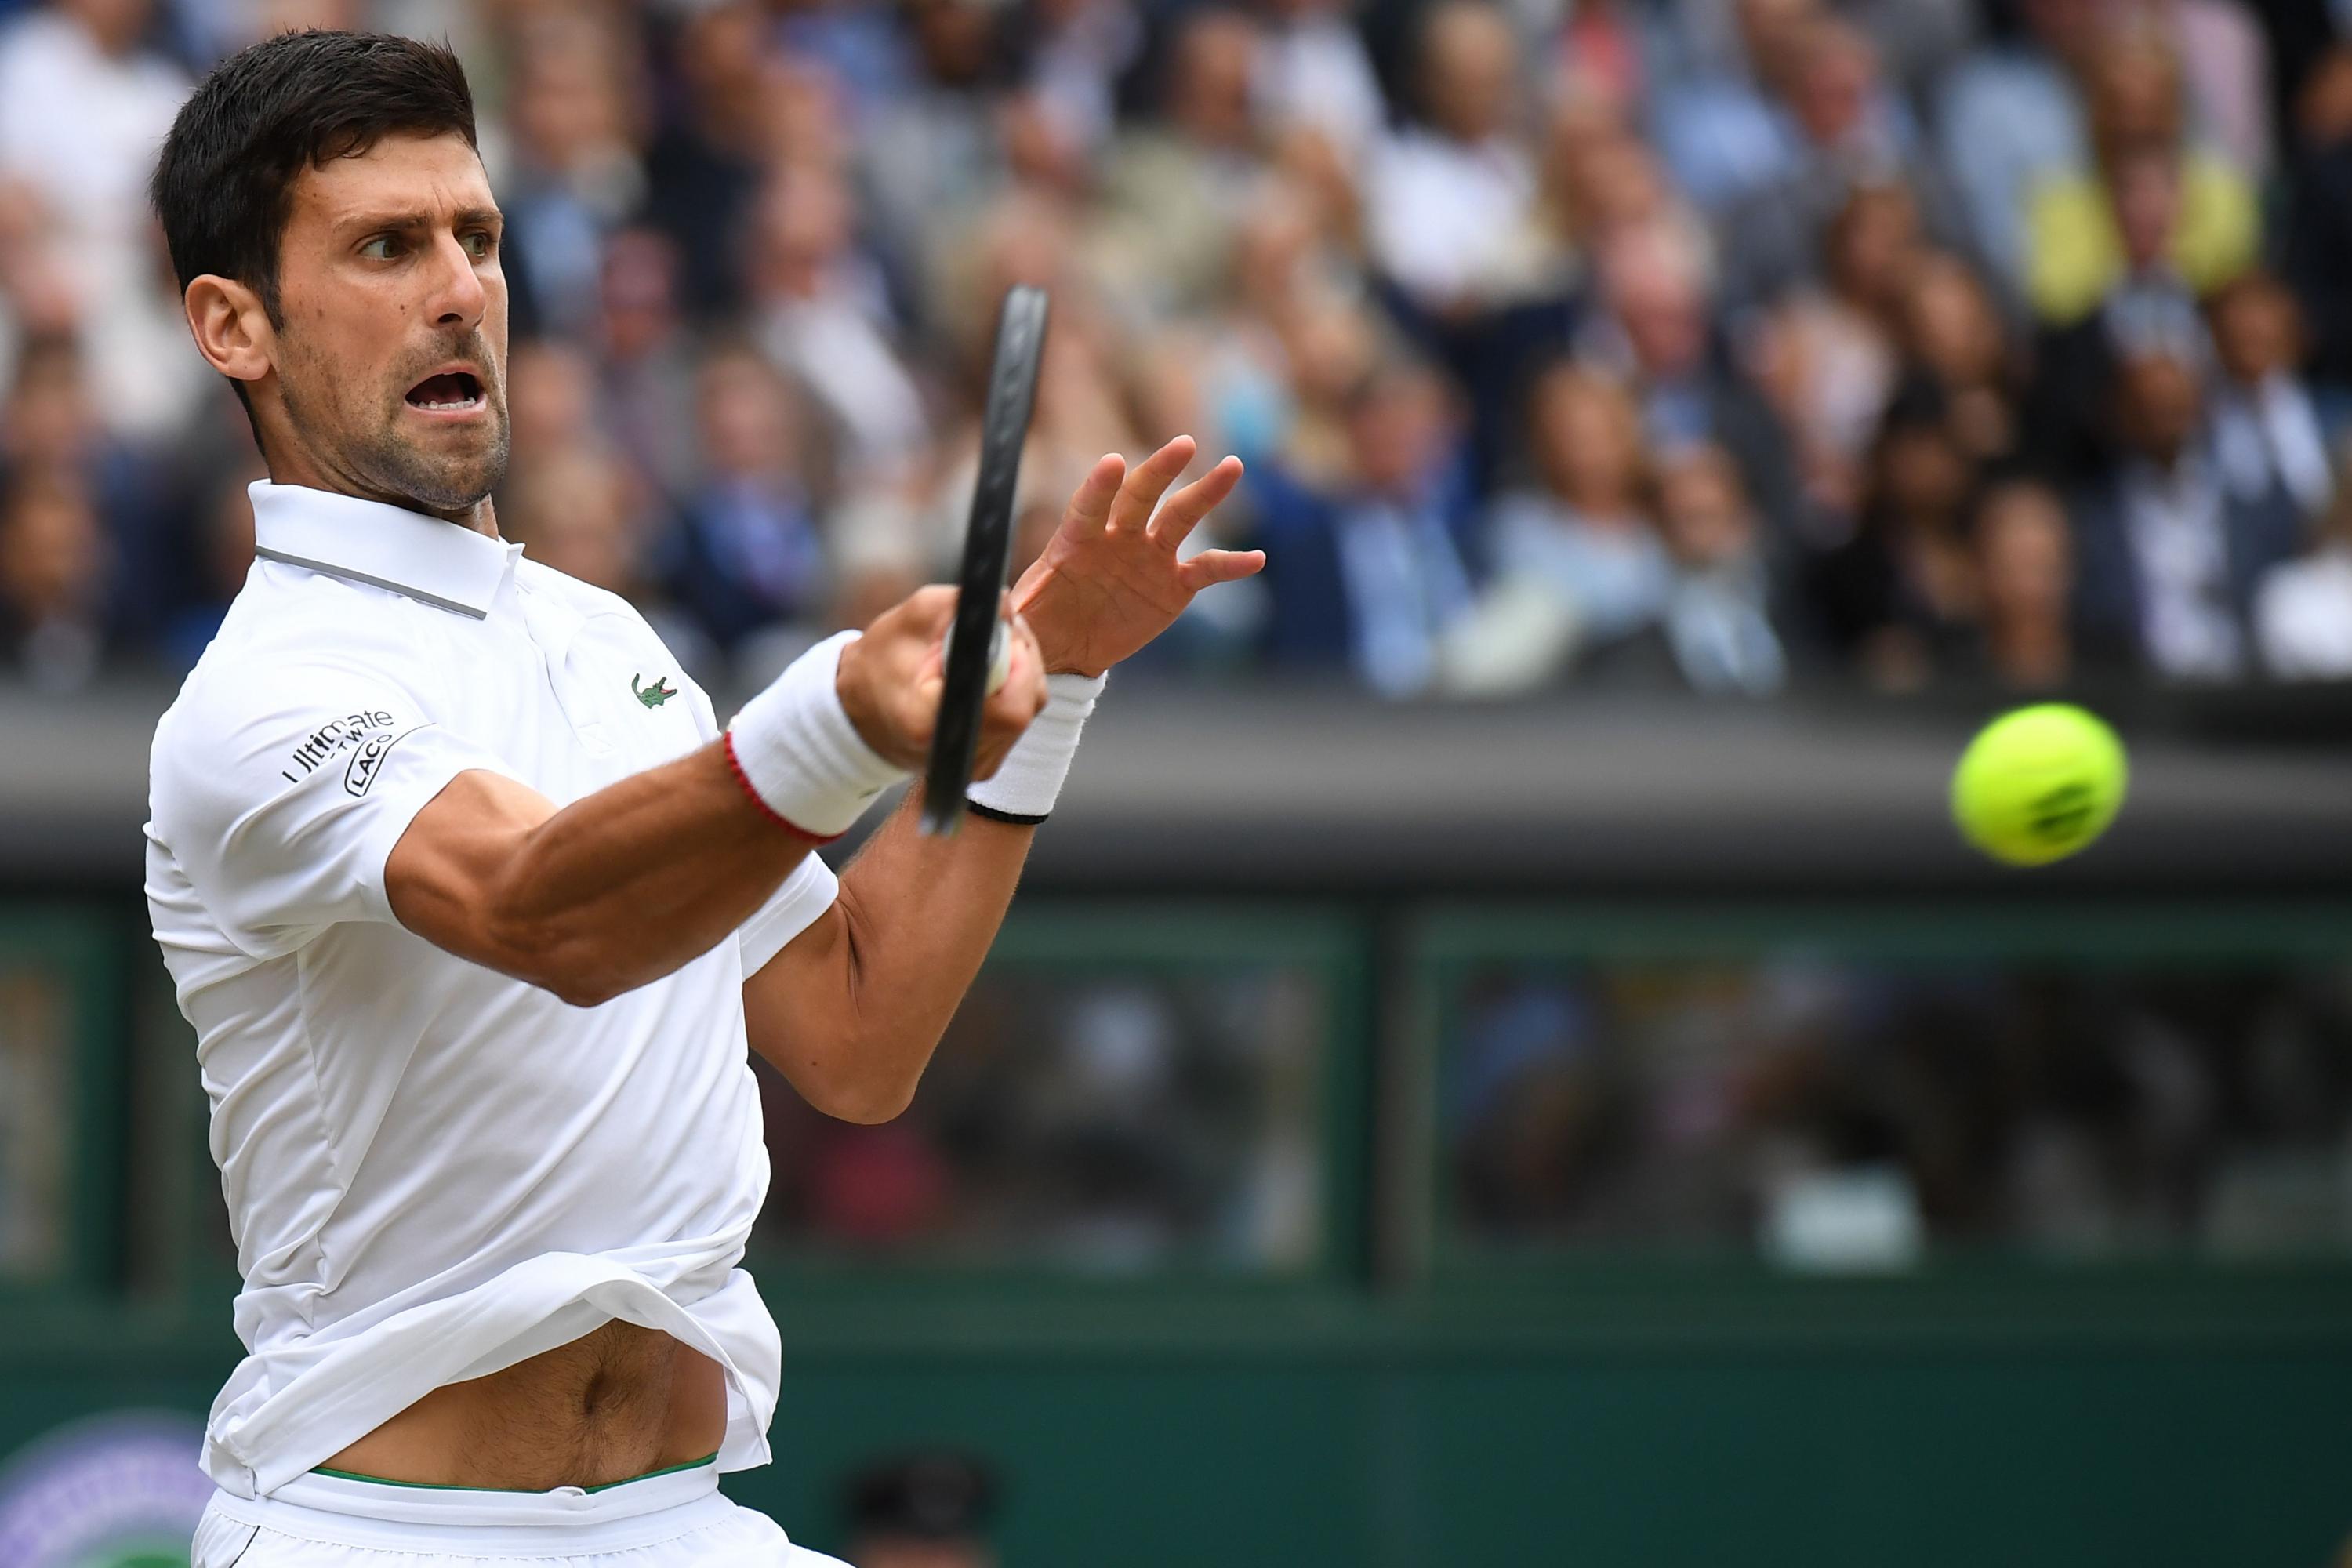 Roger Federer vs. Novak Djokovic: mira las postales de la final de Wimbledon 2019 | Foto: Agencias